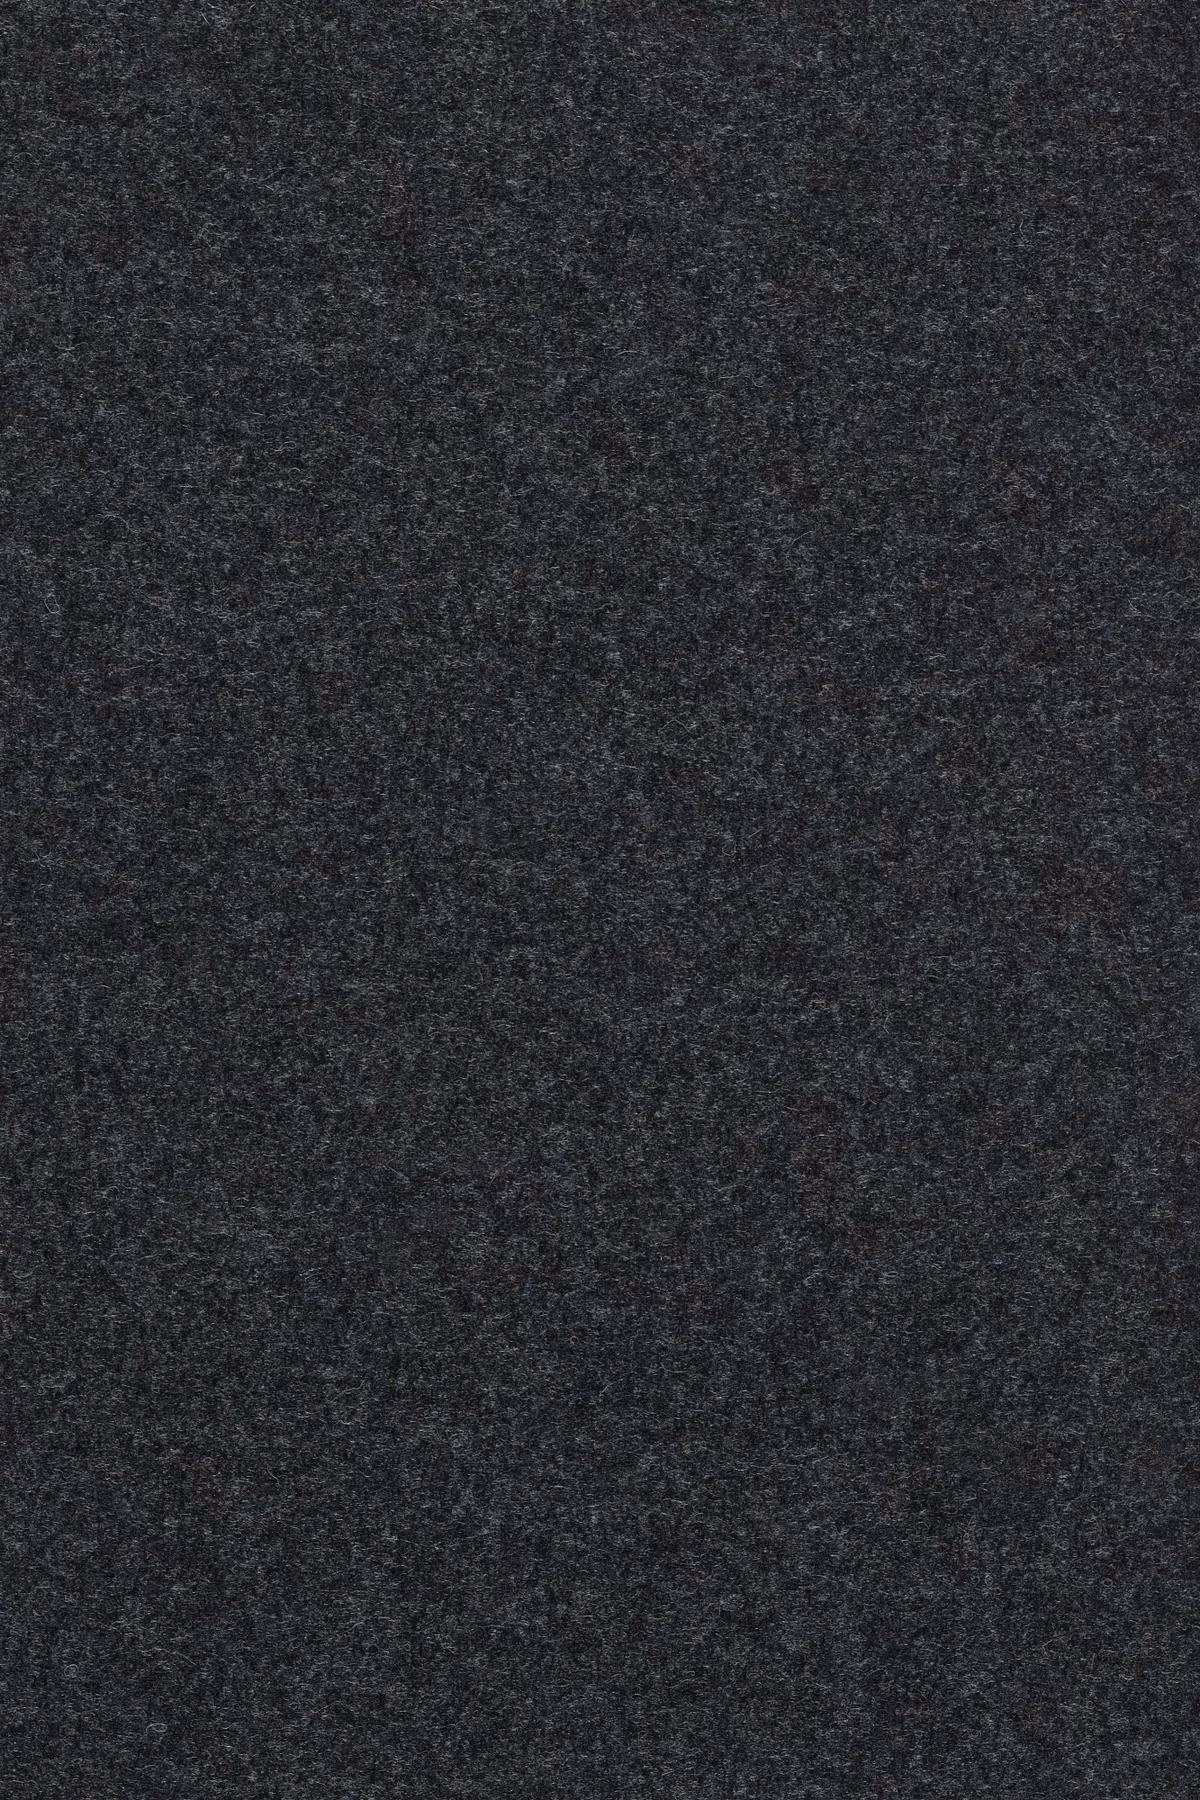 Fabric sample Divina MD 193 black